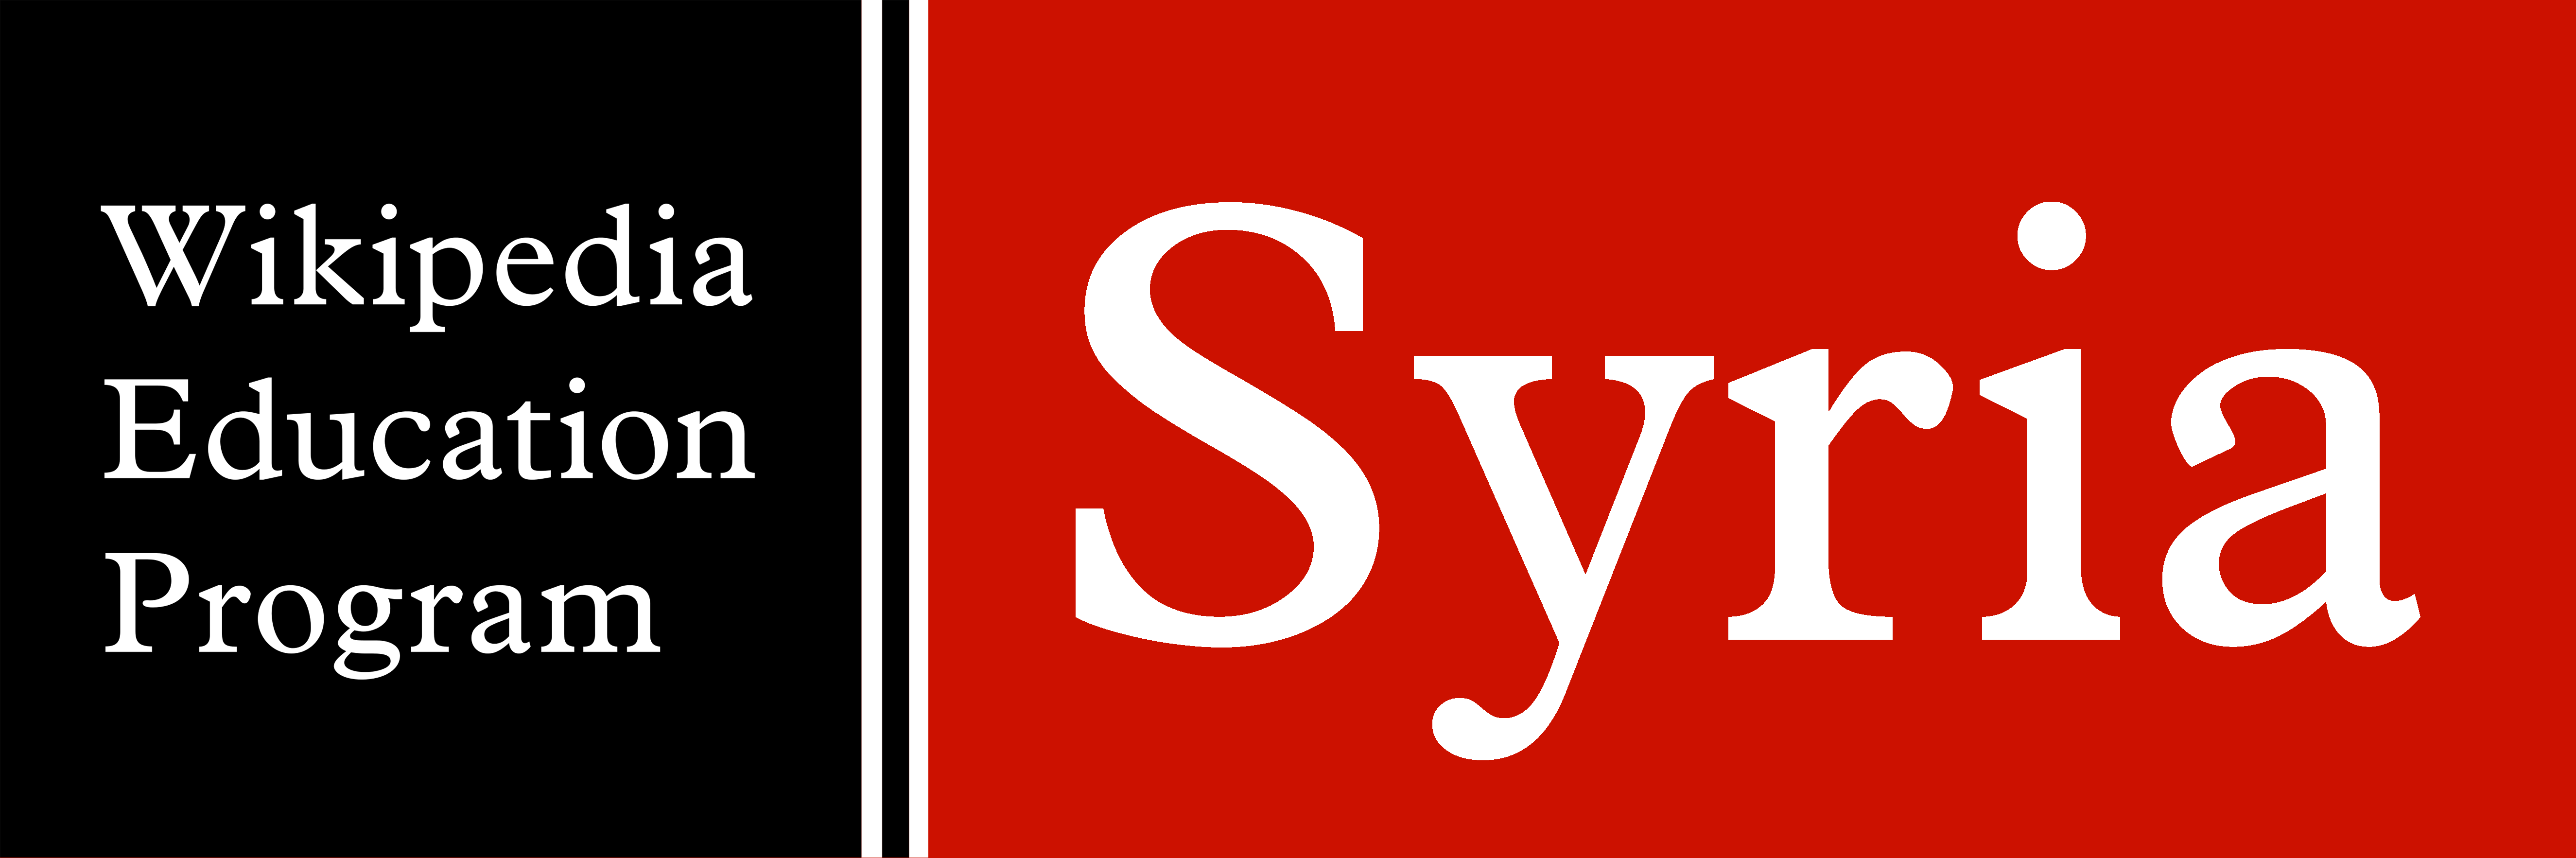 Syria Logo - File:WEP Syria logo 3.png - Wikimedia Commons